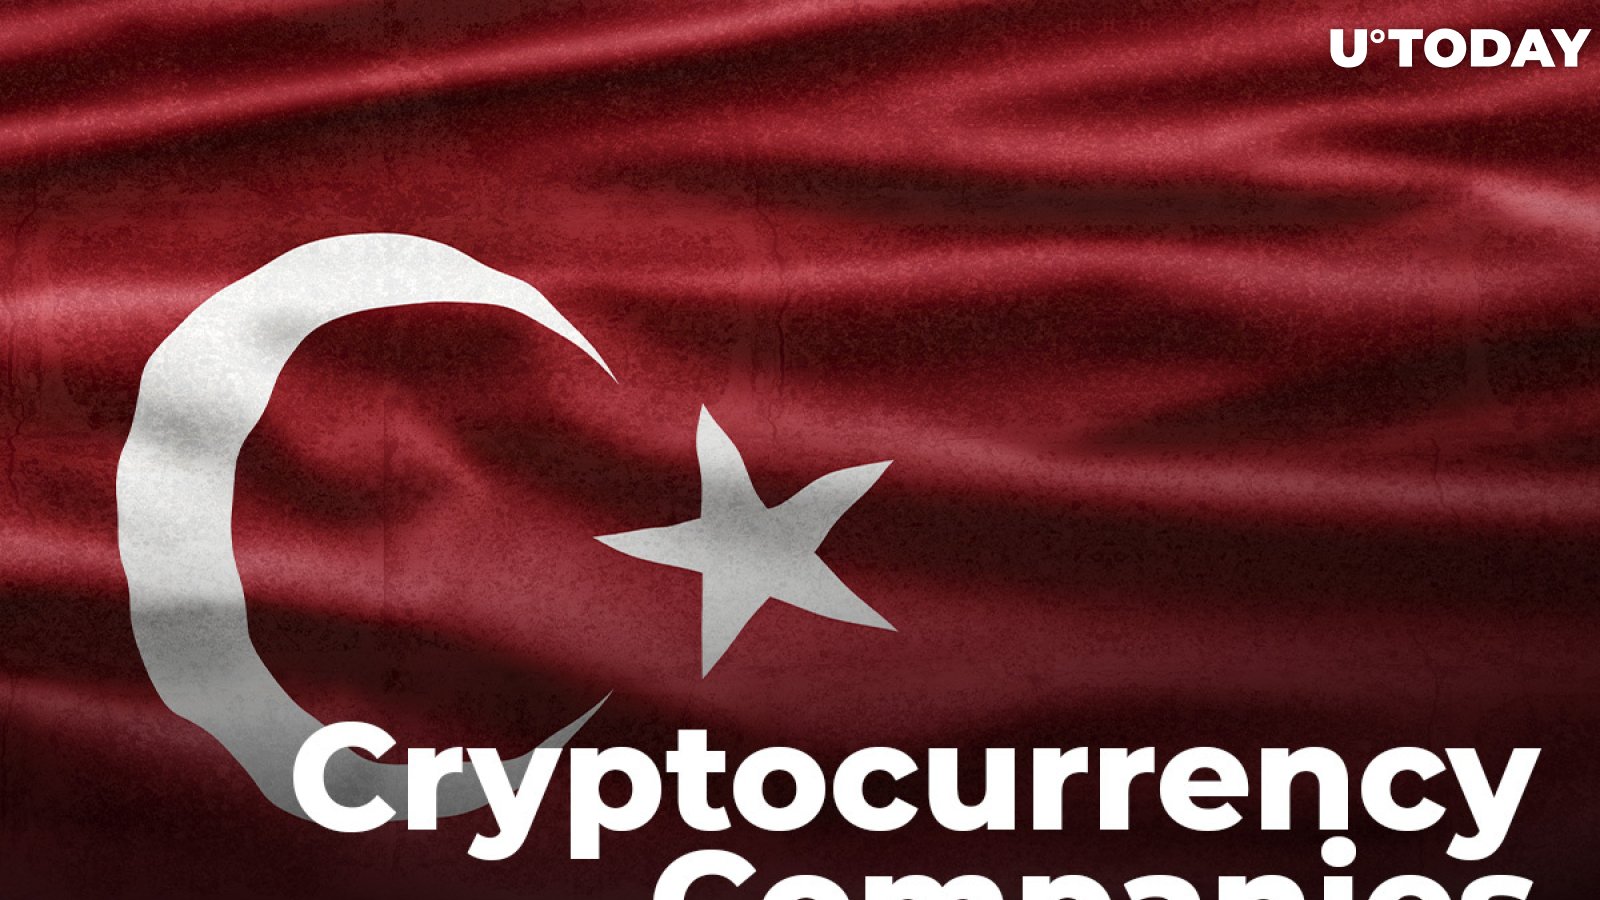 Turkey Applies Regulatory Measures to Cryptocurrency Companies